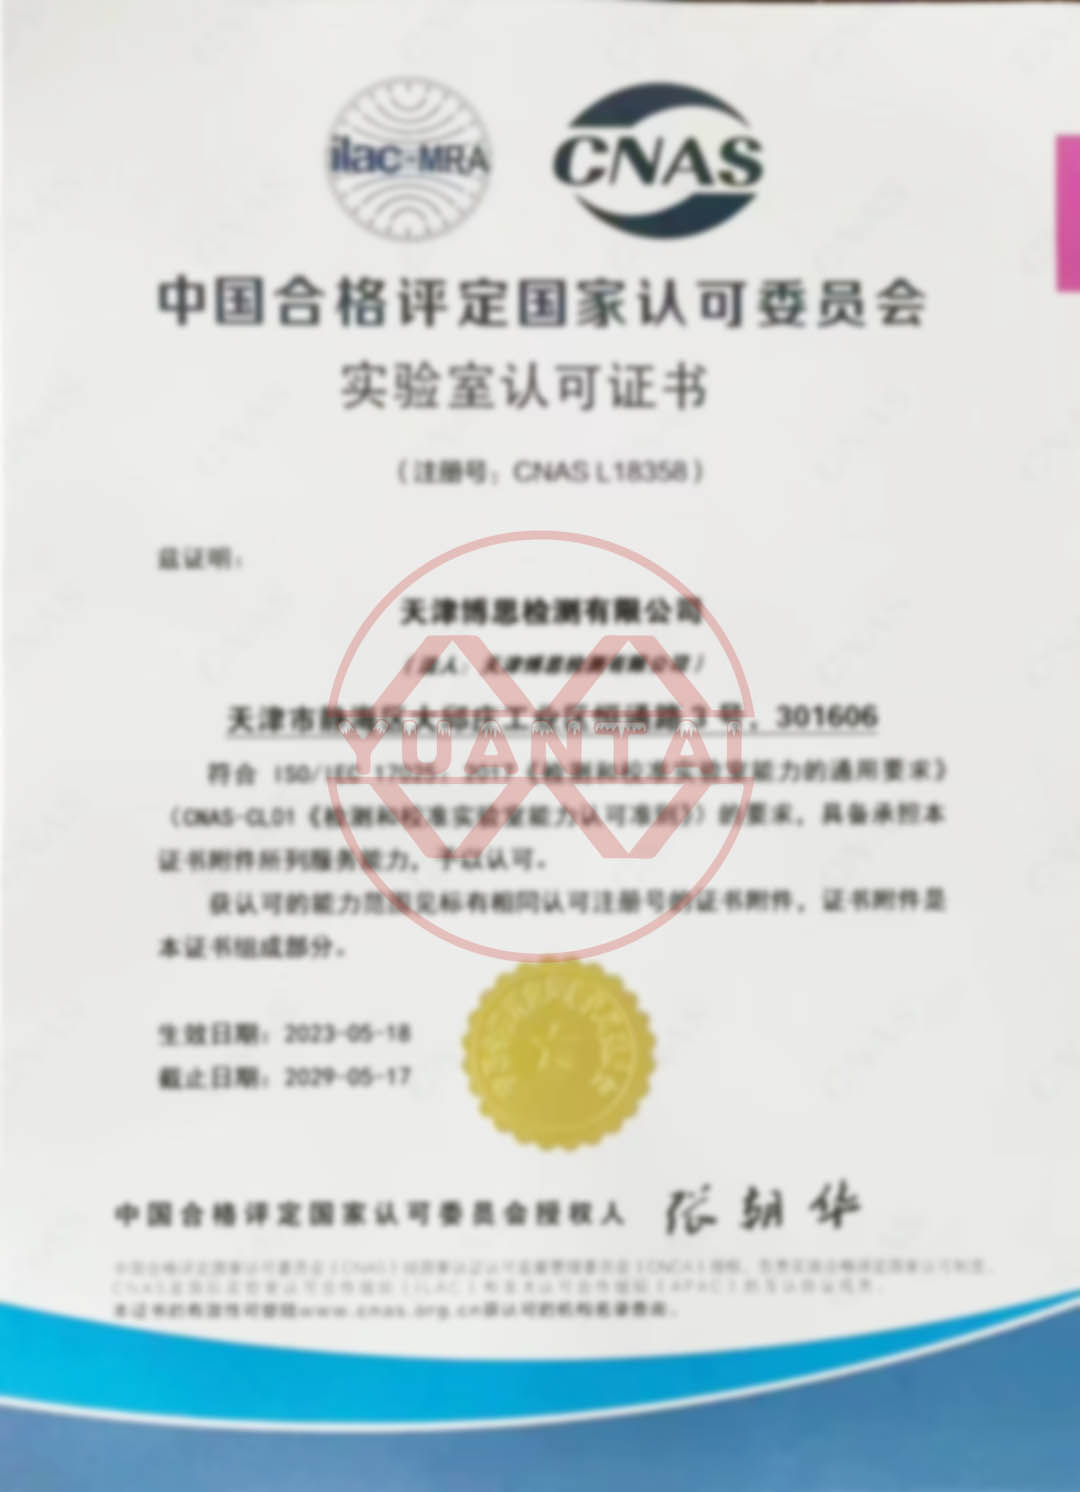 CNAS സർട്ടിഫിക്കേഷനിൽ വിജയിച്ചതിന് യുവാന്തായ് ഡെറുൺ സ്റ്റീൽ പൈപ്പ് ഗ്രൂപ്പിന്റെ അനുബന്ധ സ്ഥാപനമായ Tianjin Bosi Testing Co., Ltd.-ന് അഭിനന്ദനങ്ങൾ.